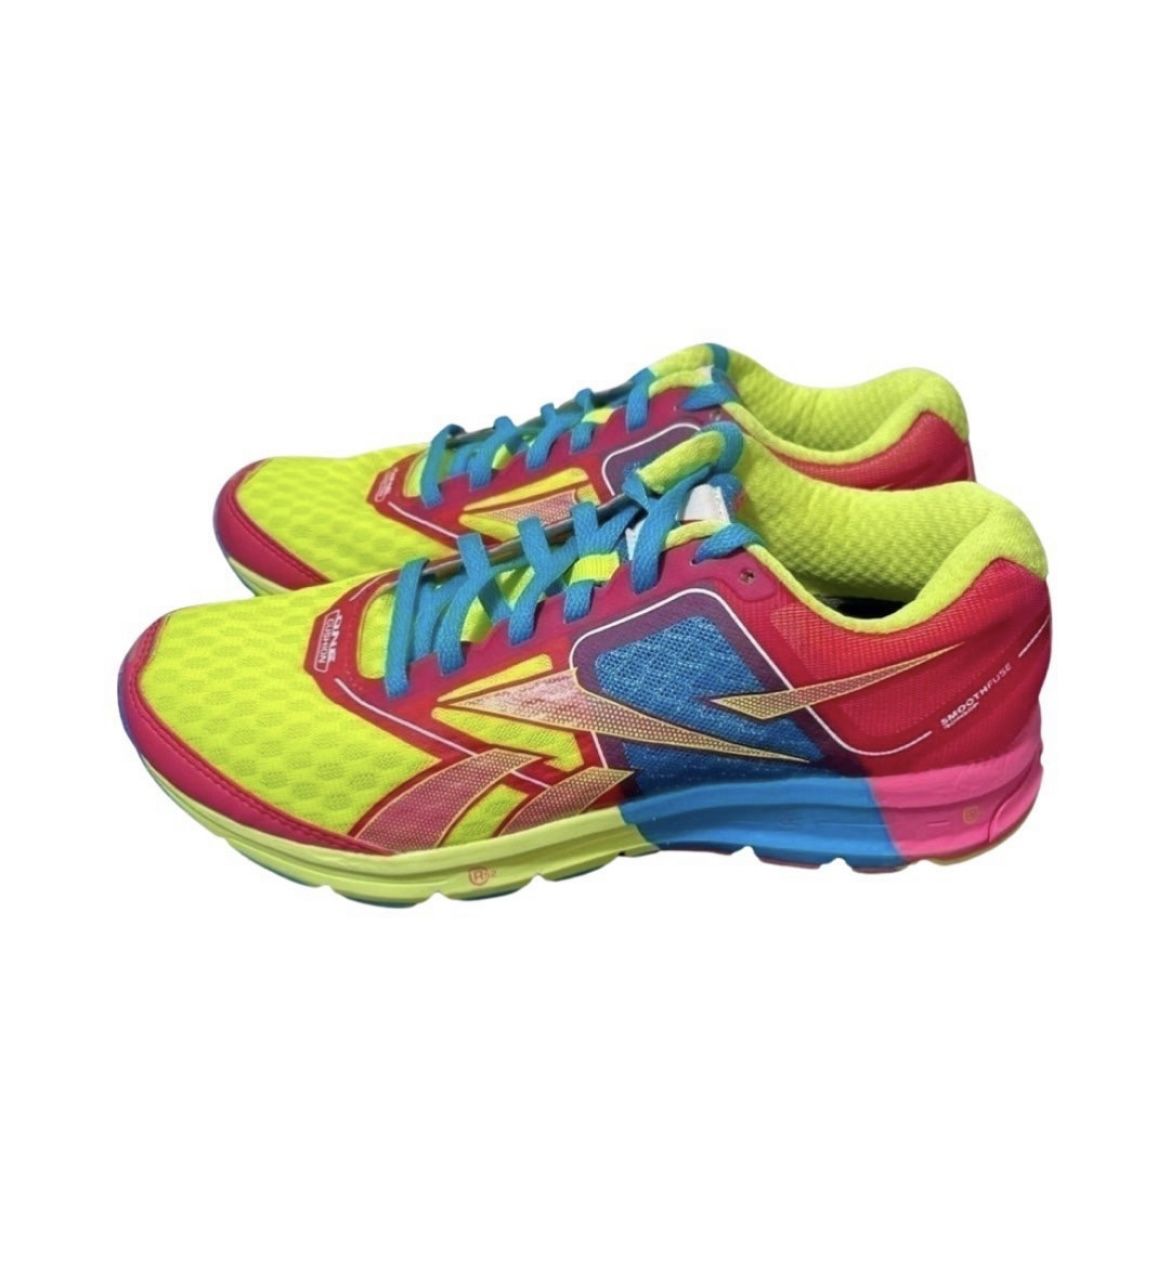 Reebok One Cushion Running V60602 Training Shoe Women Sz 6 Multi-Color Neon EUC